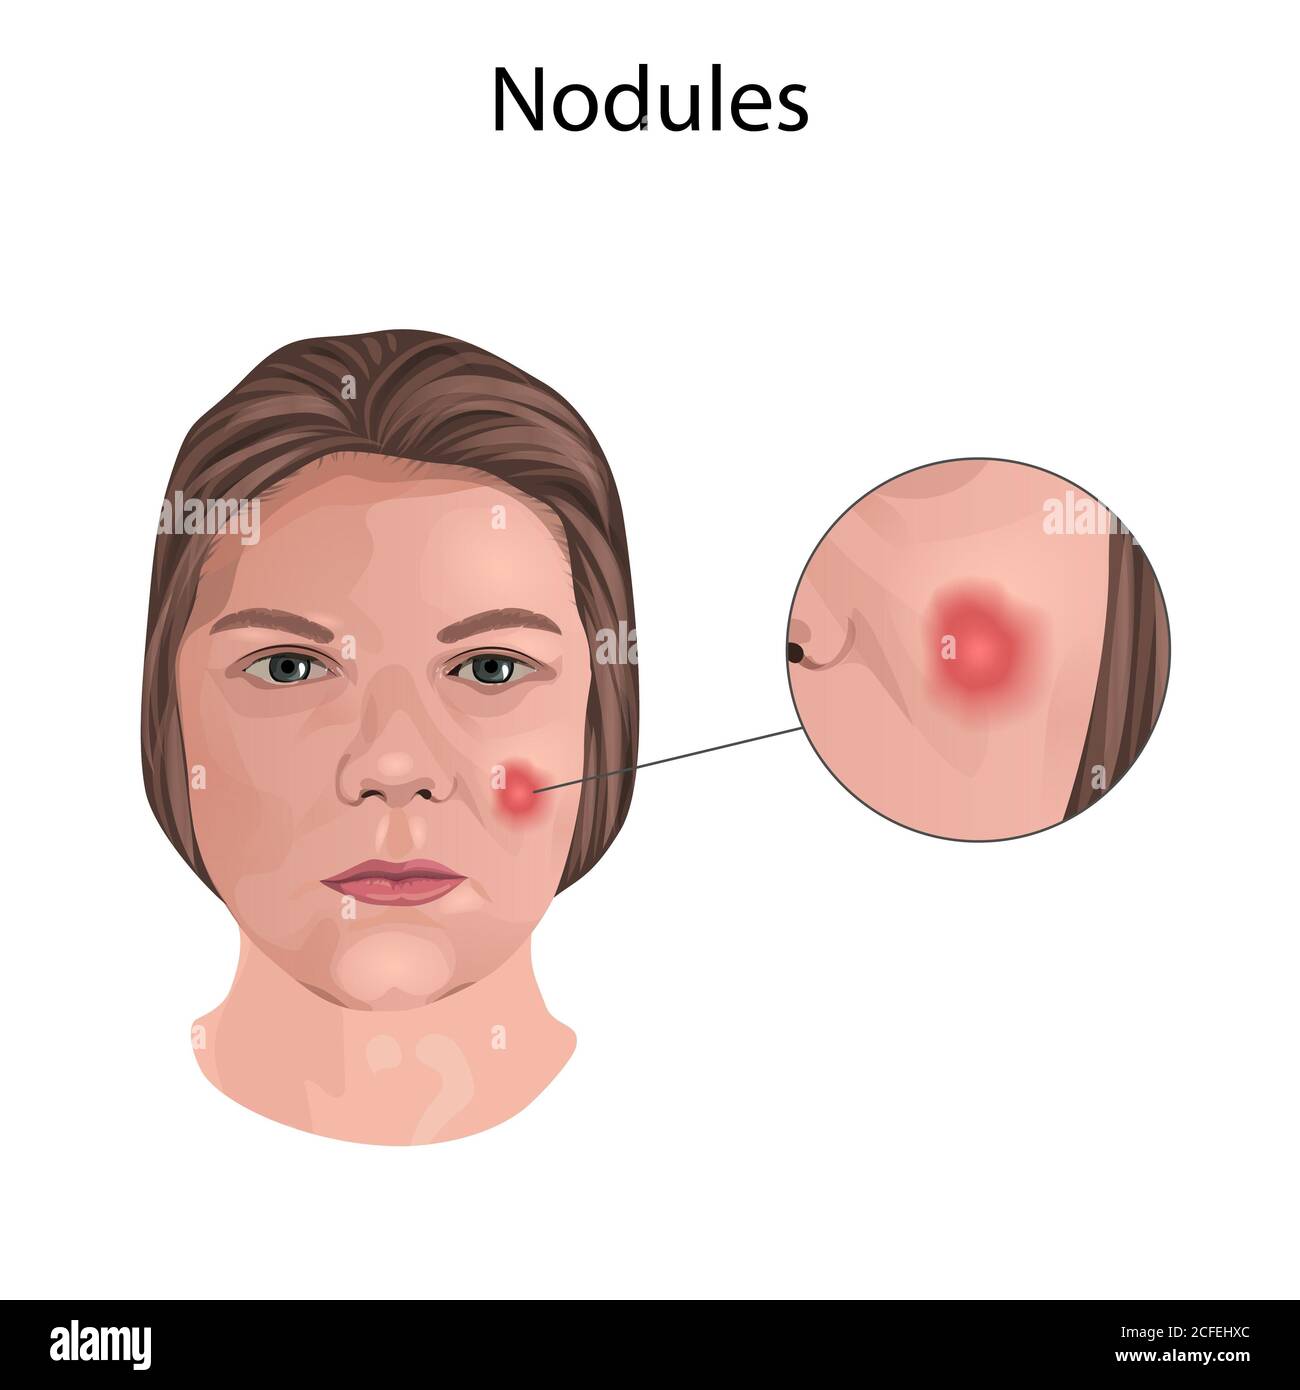 Nodules, illustration. Close-up view Stock Photo